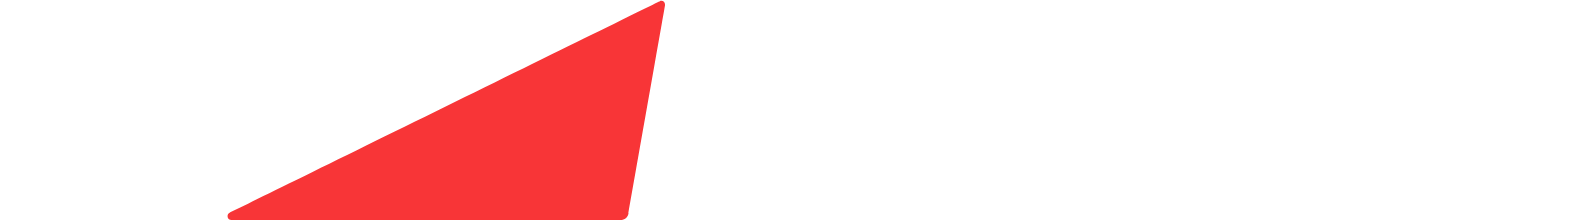 Middleby logo grand pour les fonds sombres (PNG transparent)